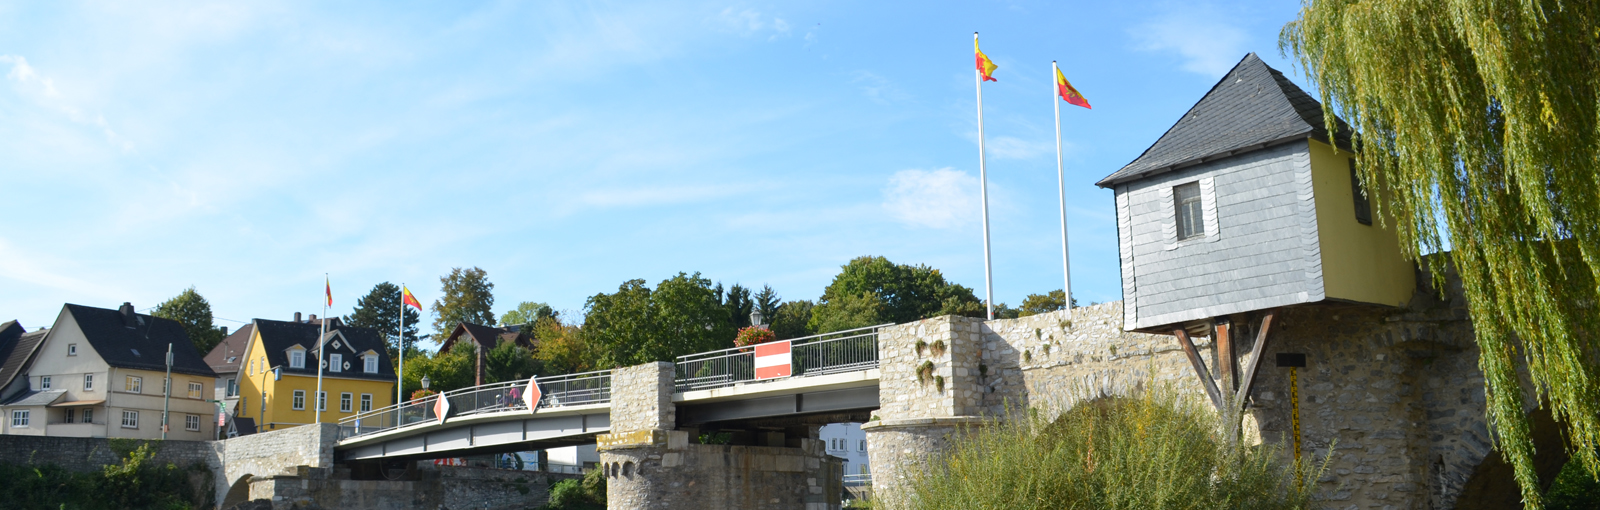 Diez, Alte Lahnbrücke